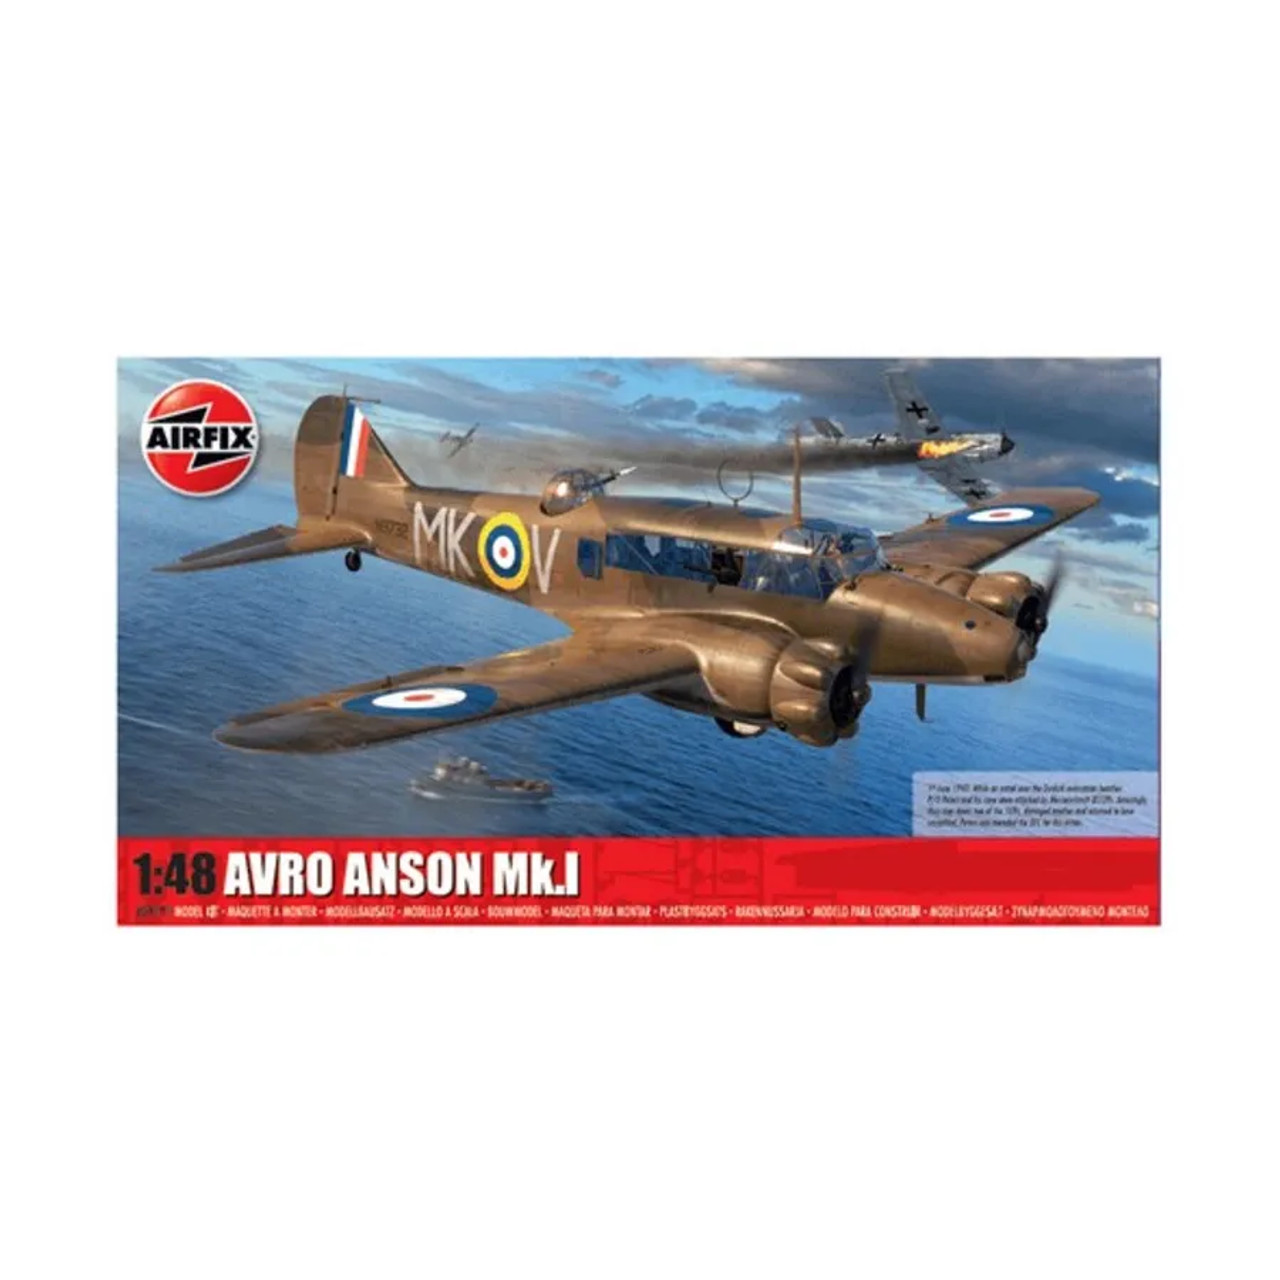 AirFix 1/48 Avro Anson Mk I Monoplane Model Kit